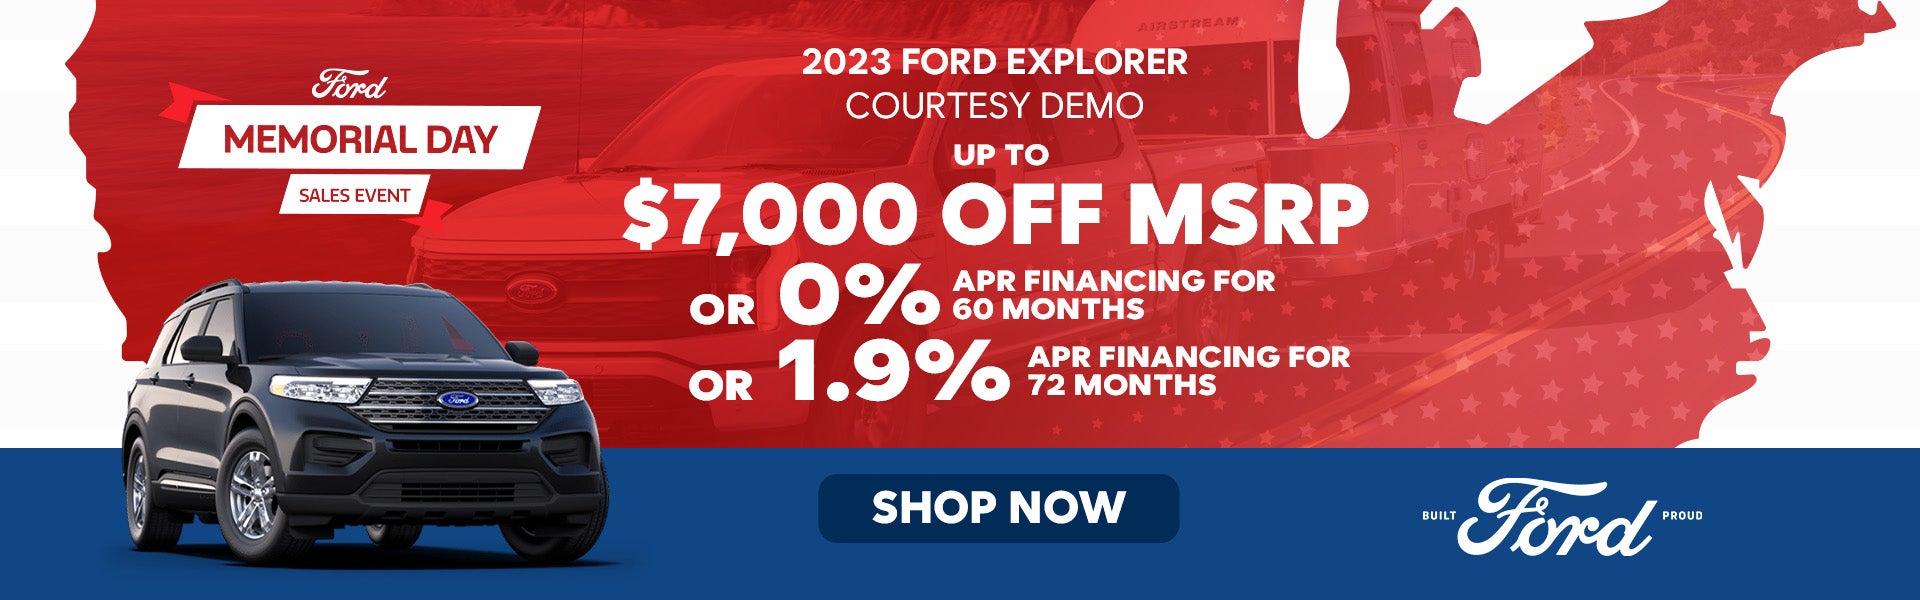 2023 Ford Explorer Courtesy Demo